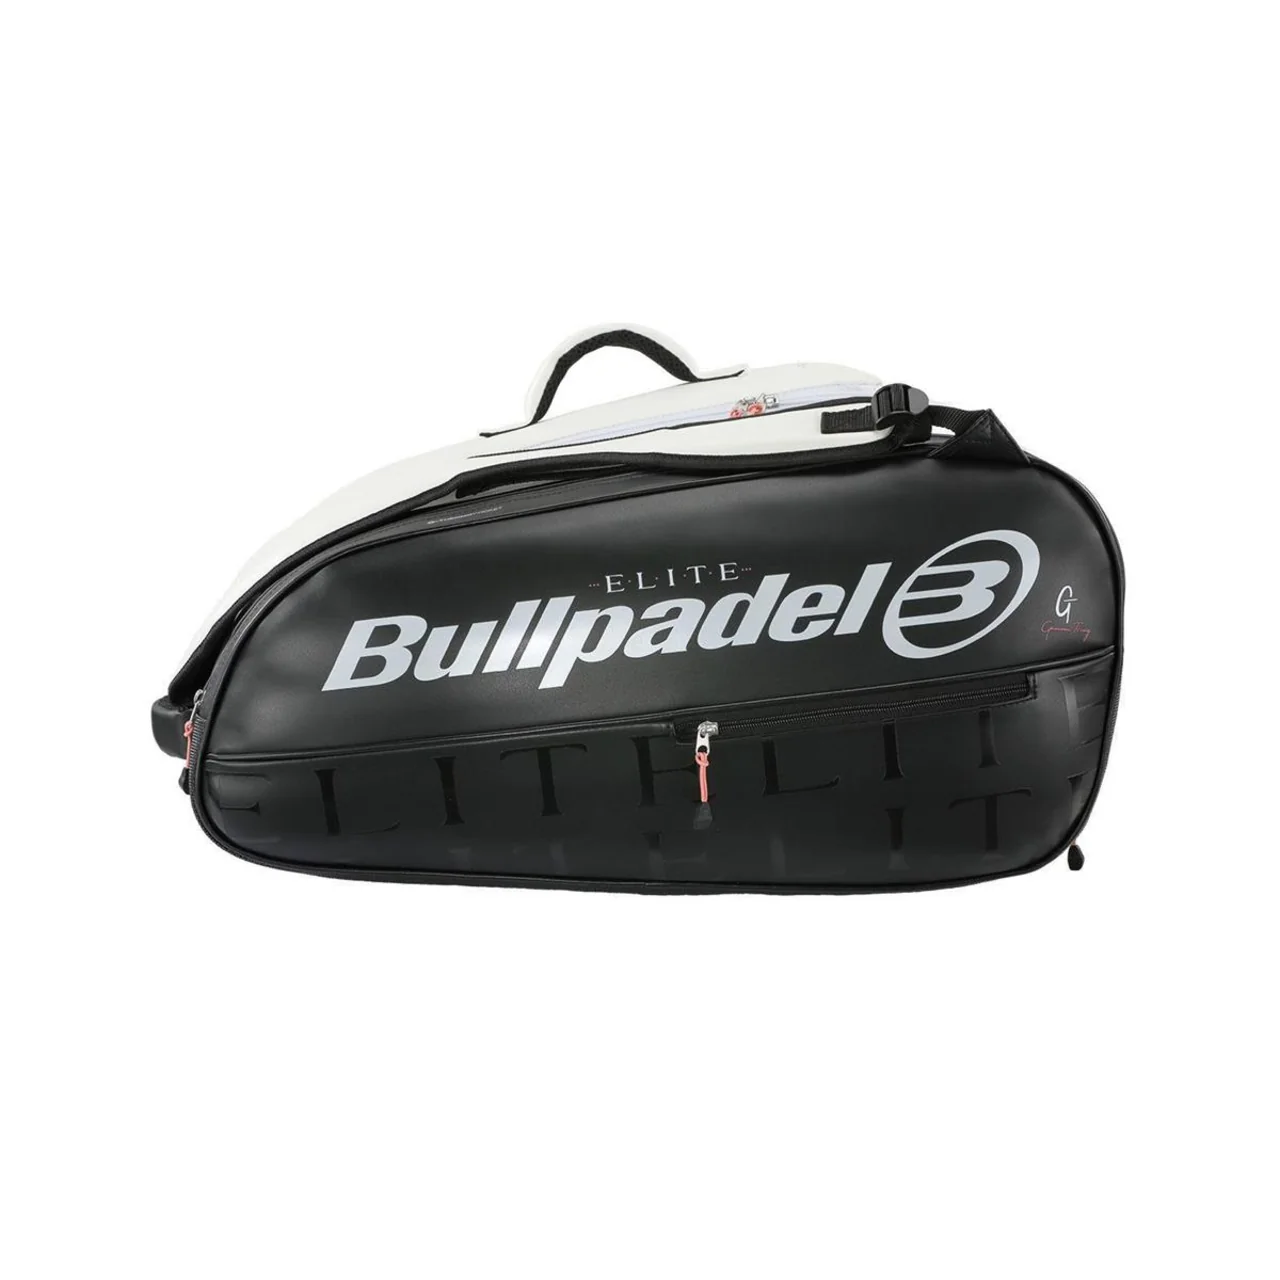 Bullpadel Elite Racket Bag Icy White/Black